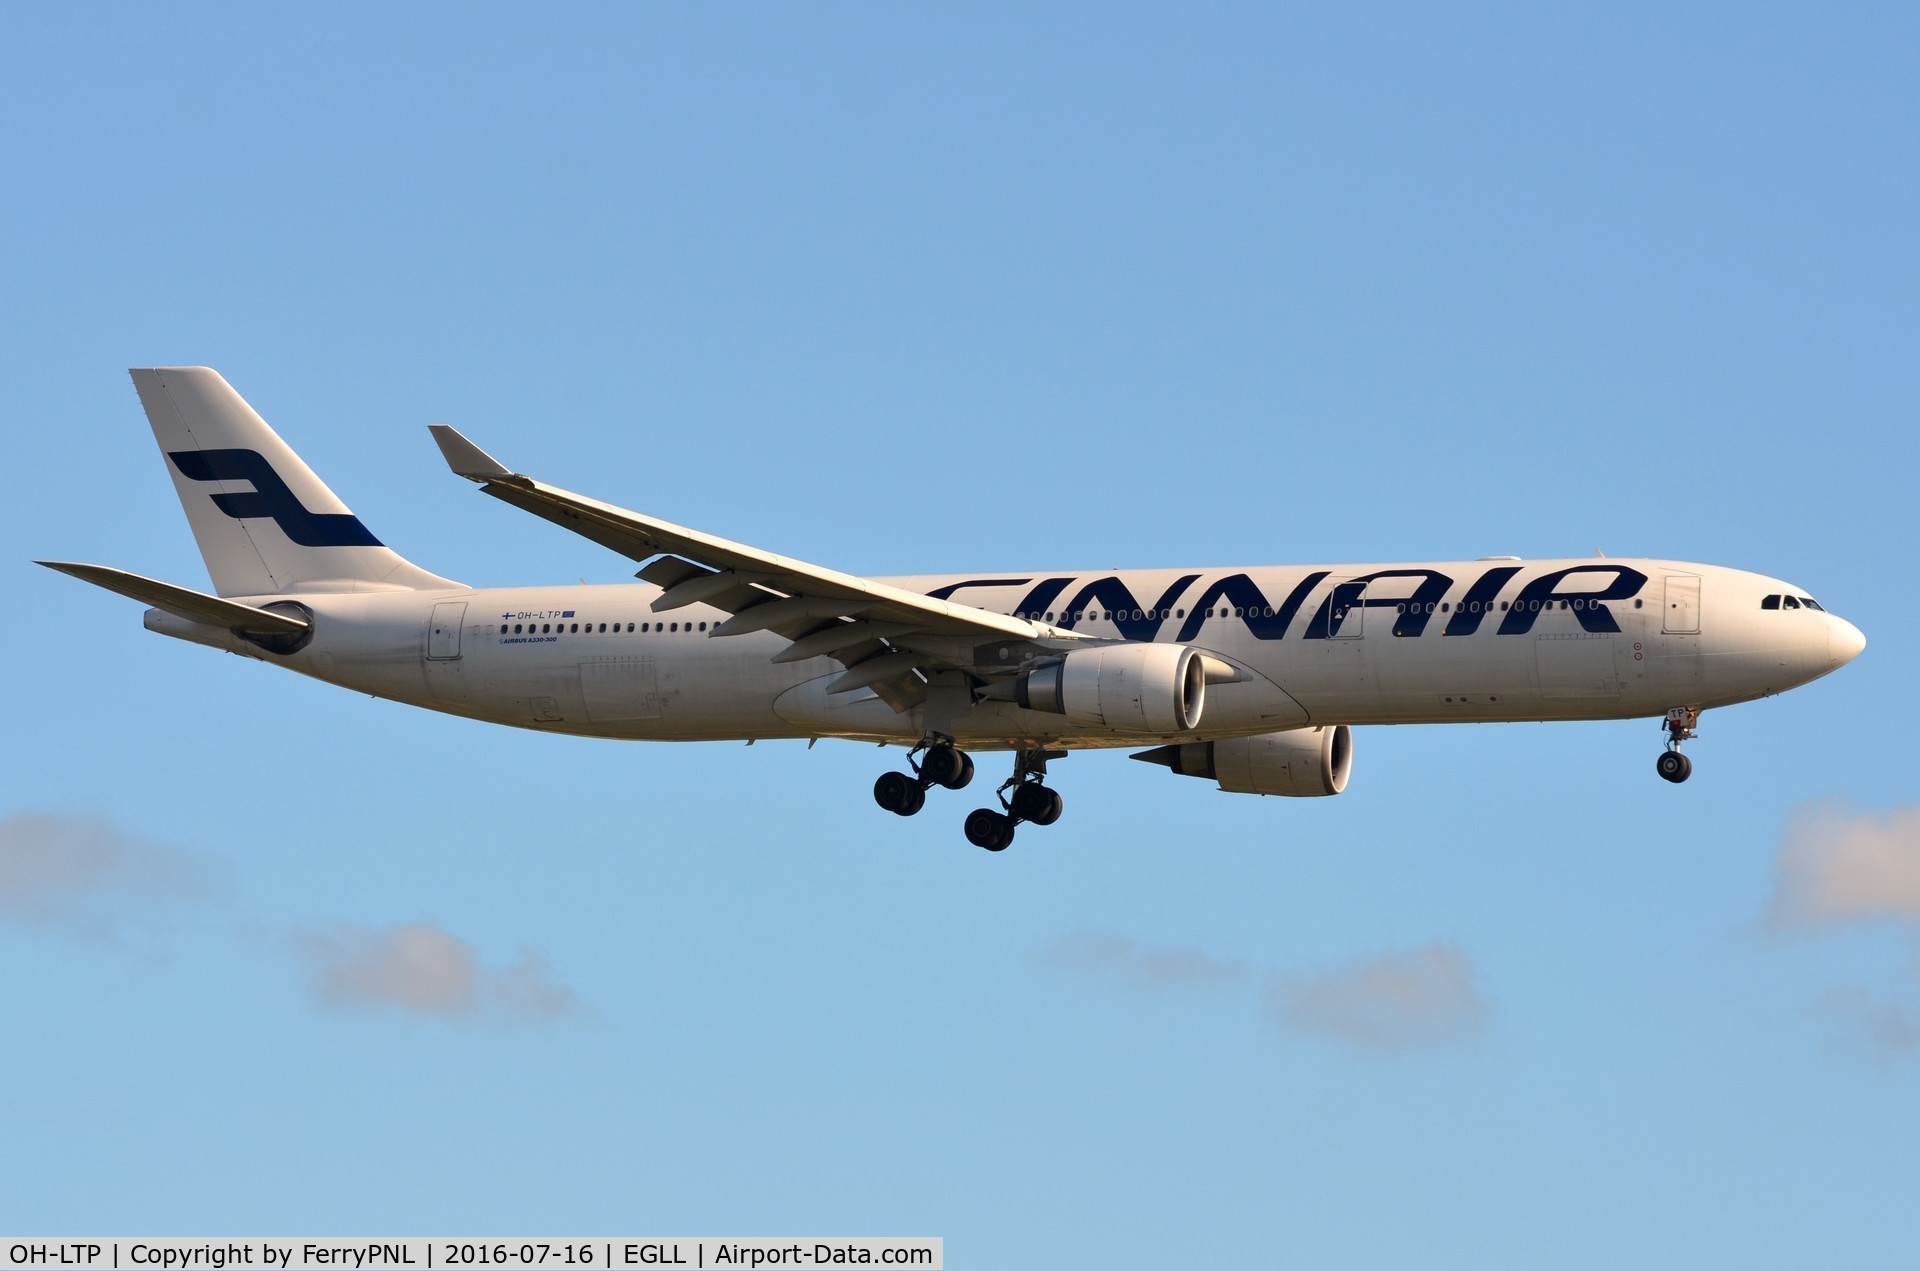 OH-LTP, 2009 Airbus A330-302X C/N 1023, Finnair A333 was a unexpected visit.